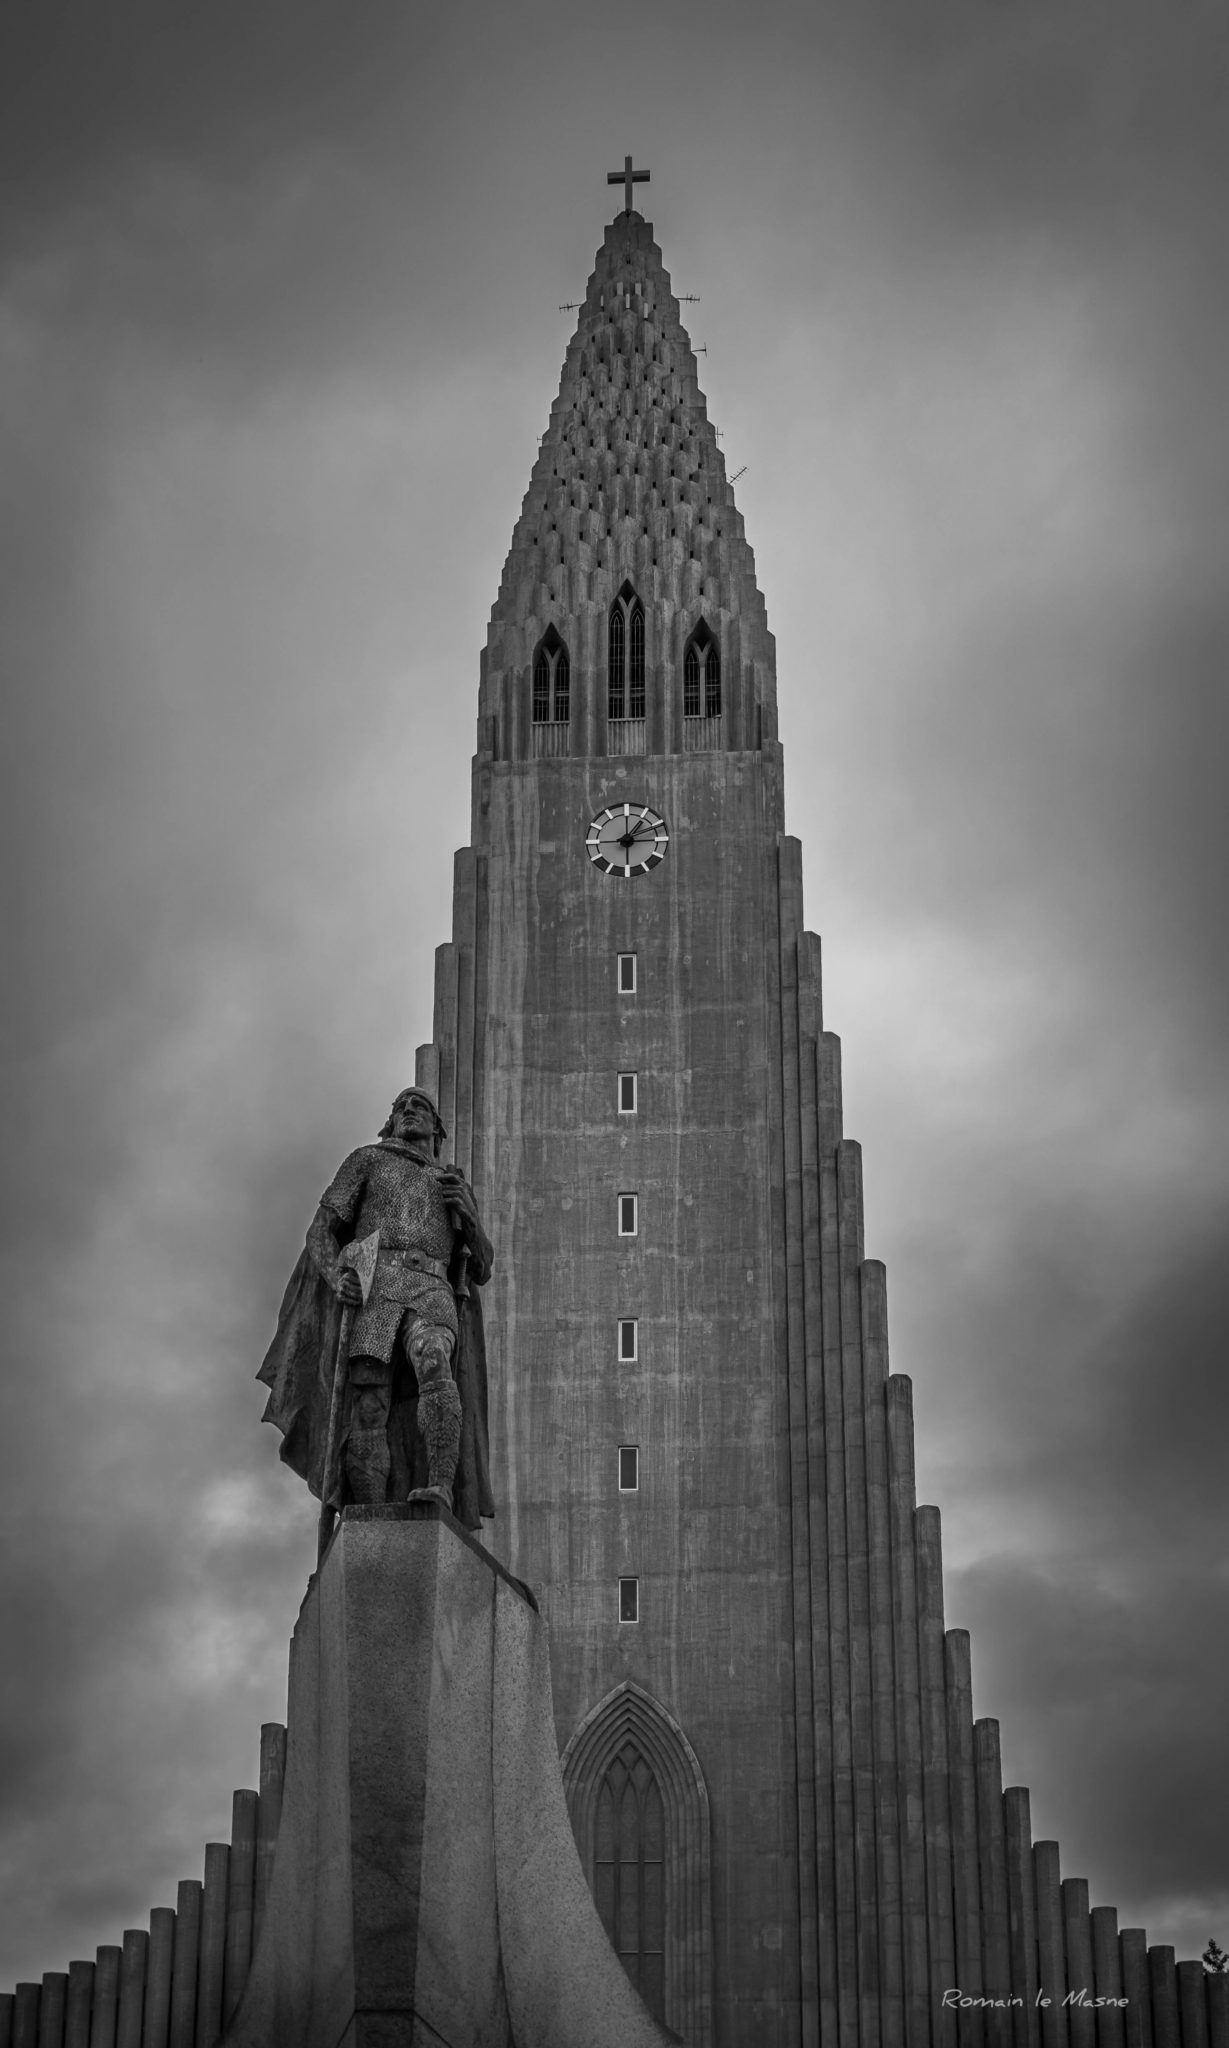 Iceland-1